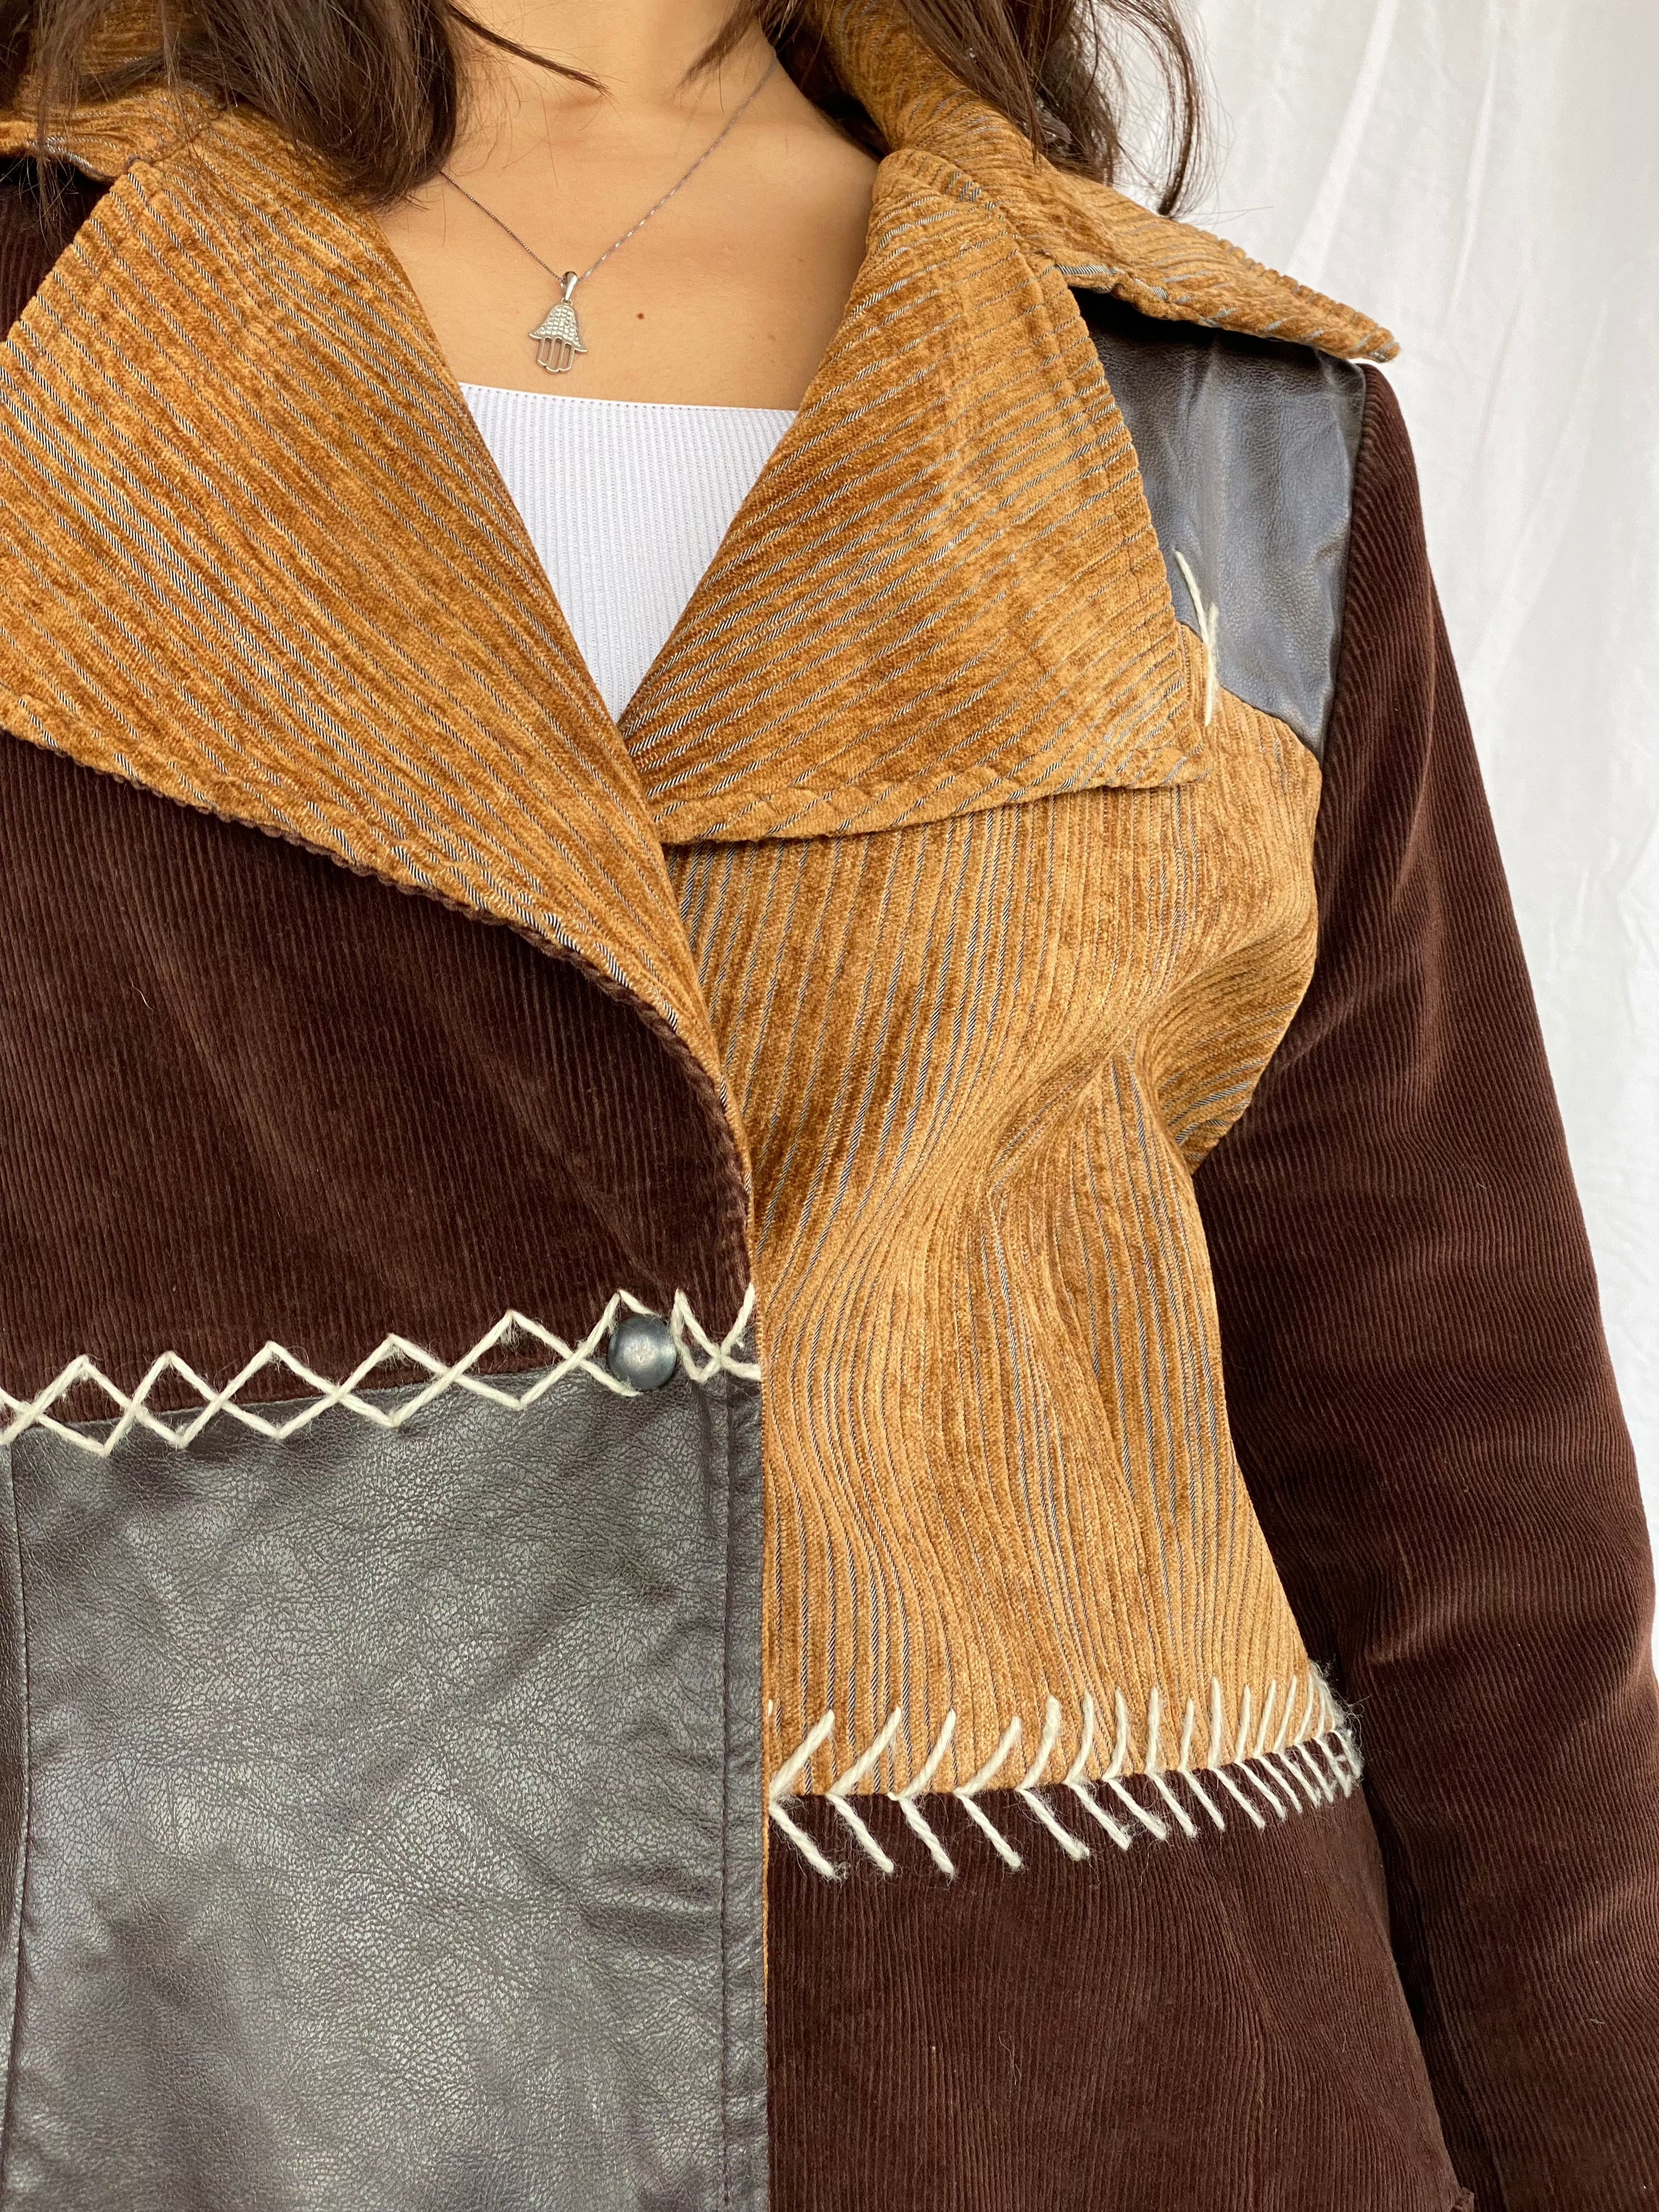 Vintage BUGARRI Collection Coat - Balagan Vintage Coat brown leather, coat, leather coat, patchwork, patchwork jacket